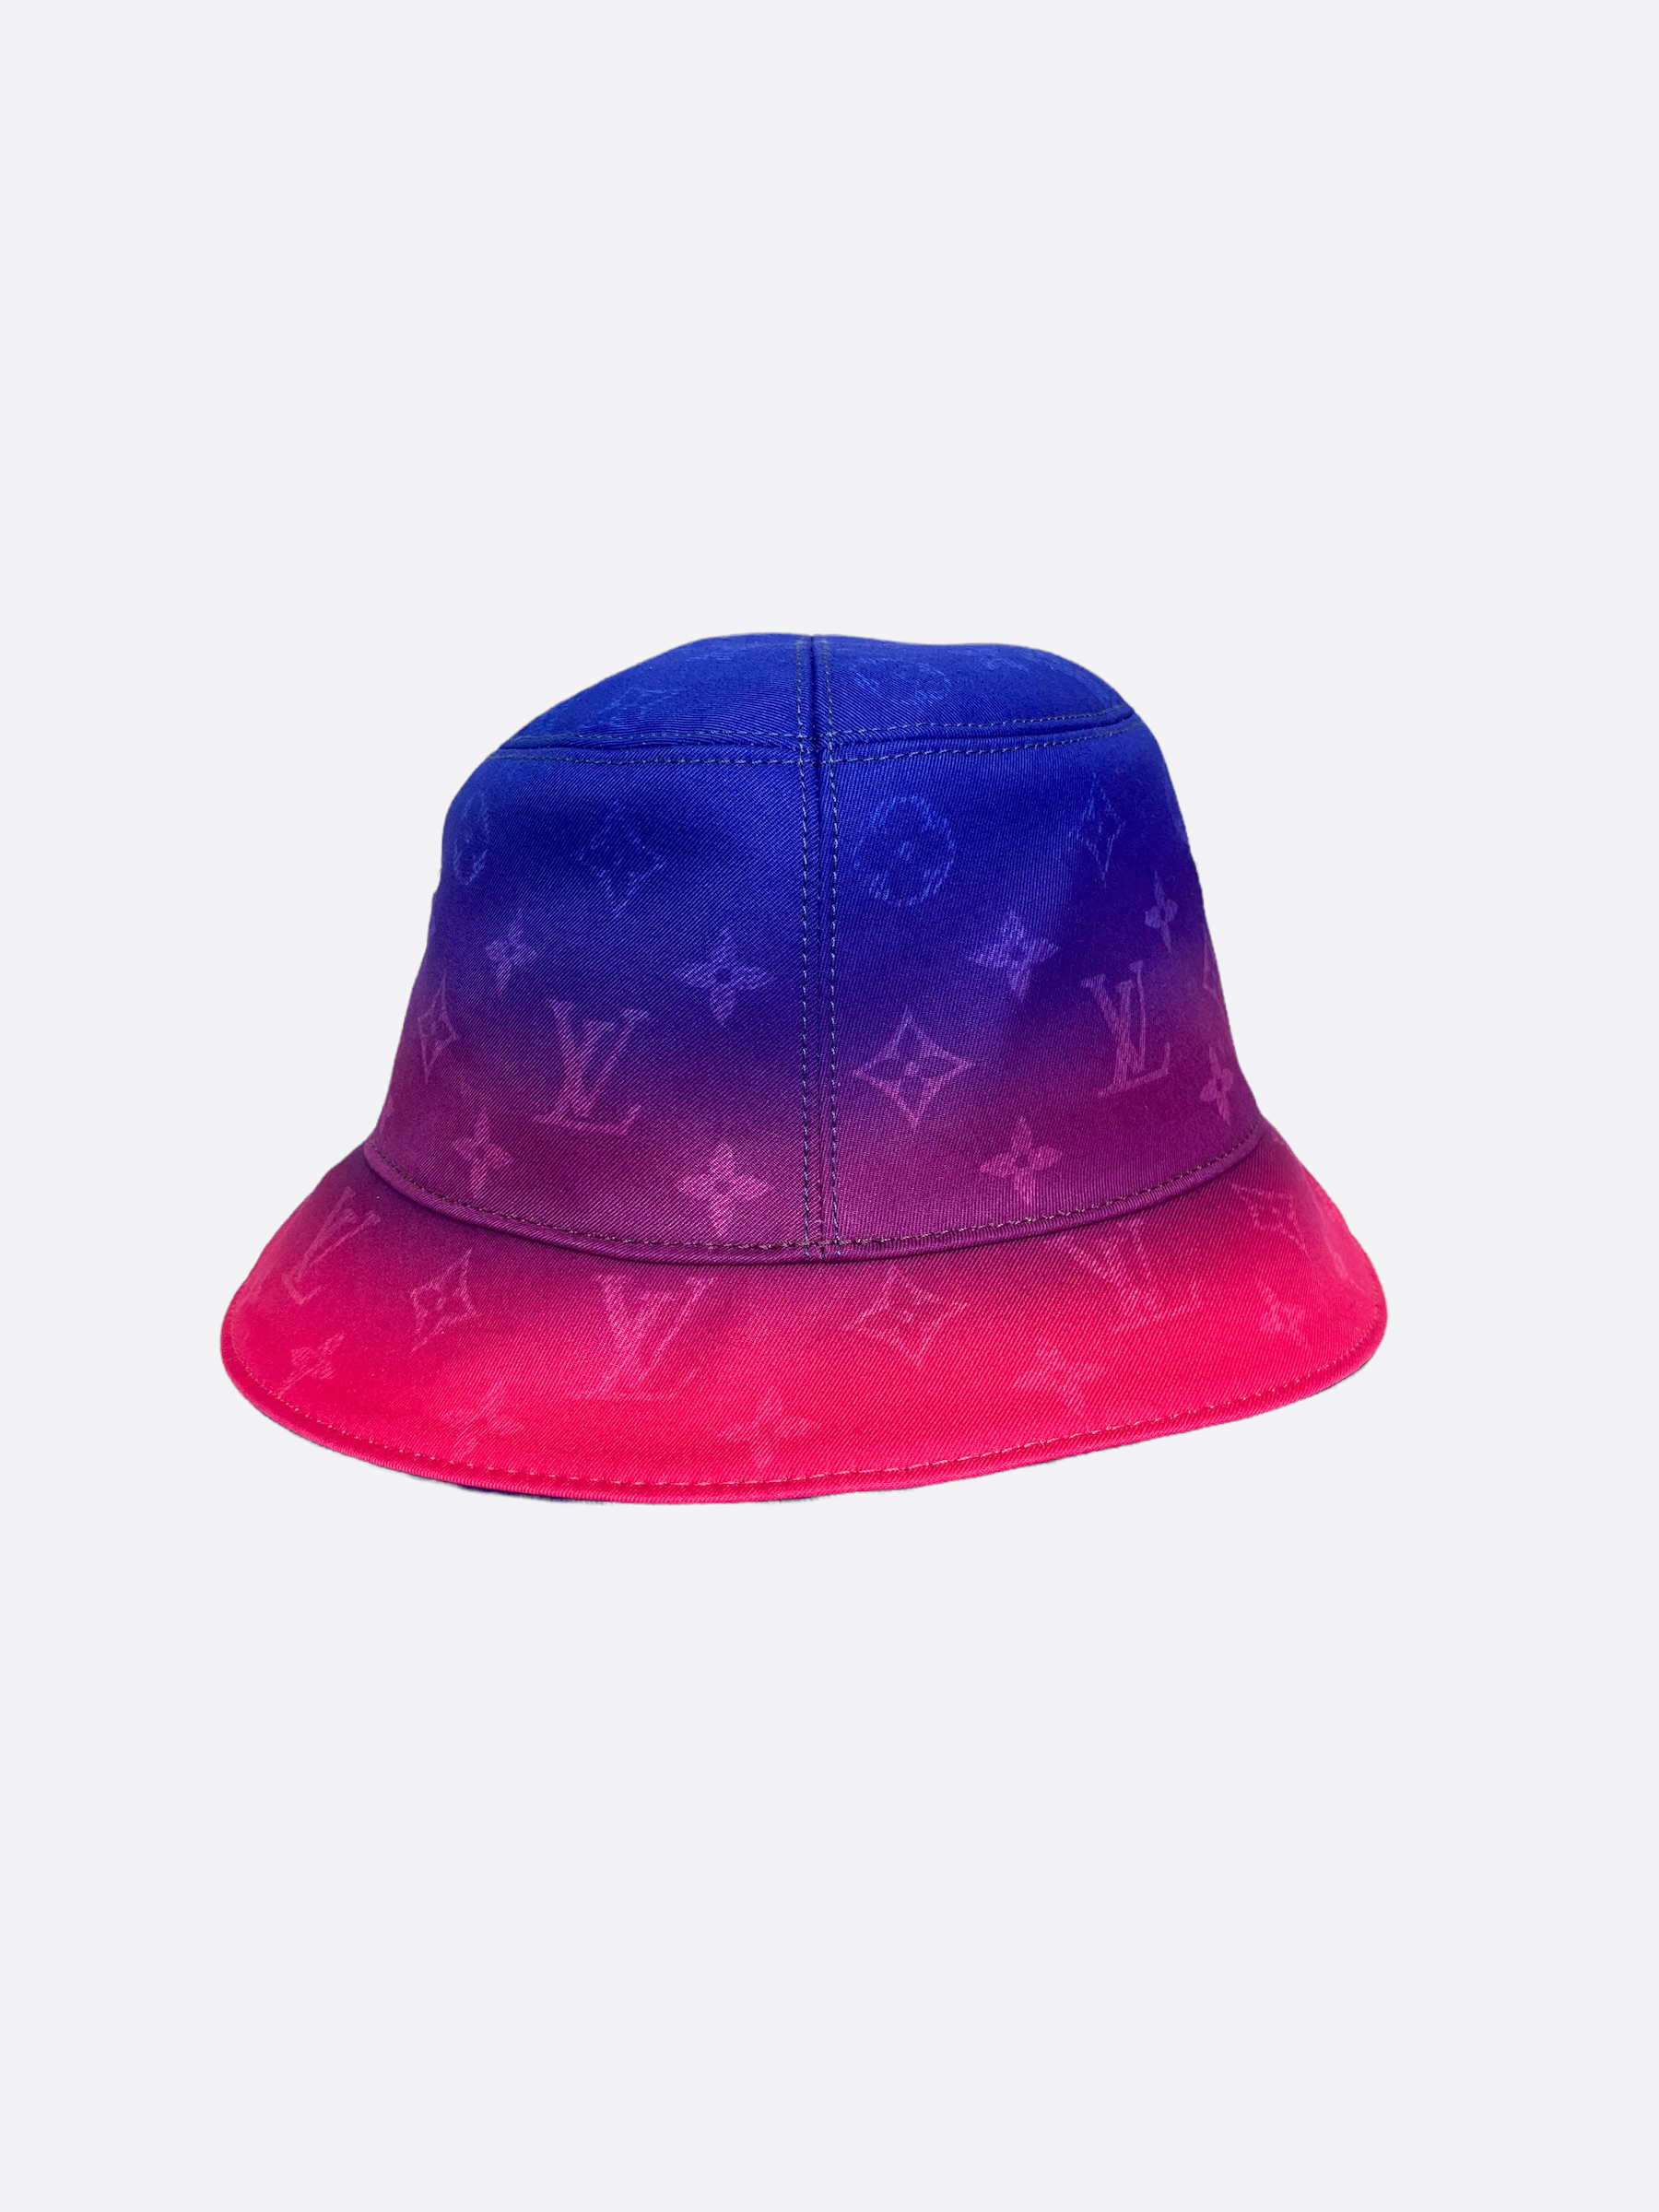 Louis Vuitton Monogram Bucket Hat - Third Color - HypedEffect